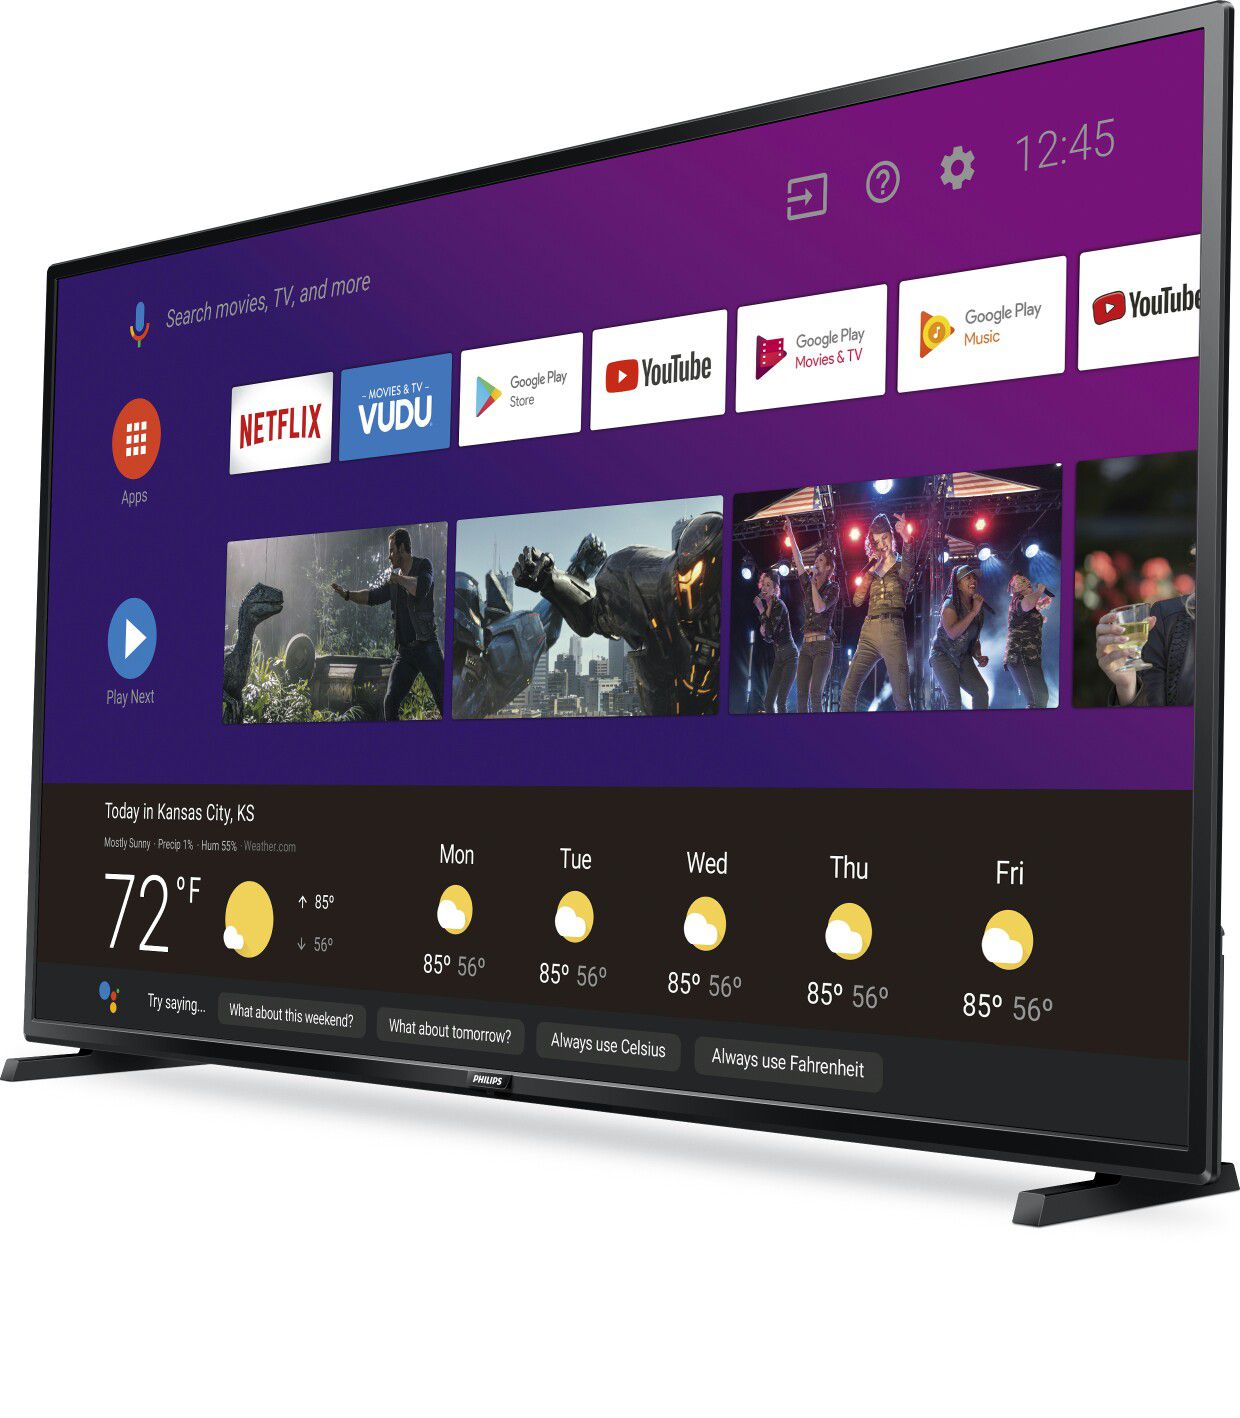 50 inch Philips 4k ultra HD smart tv